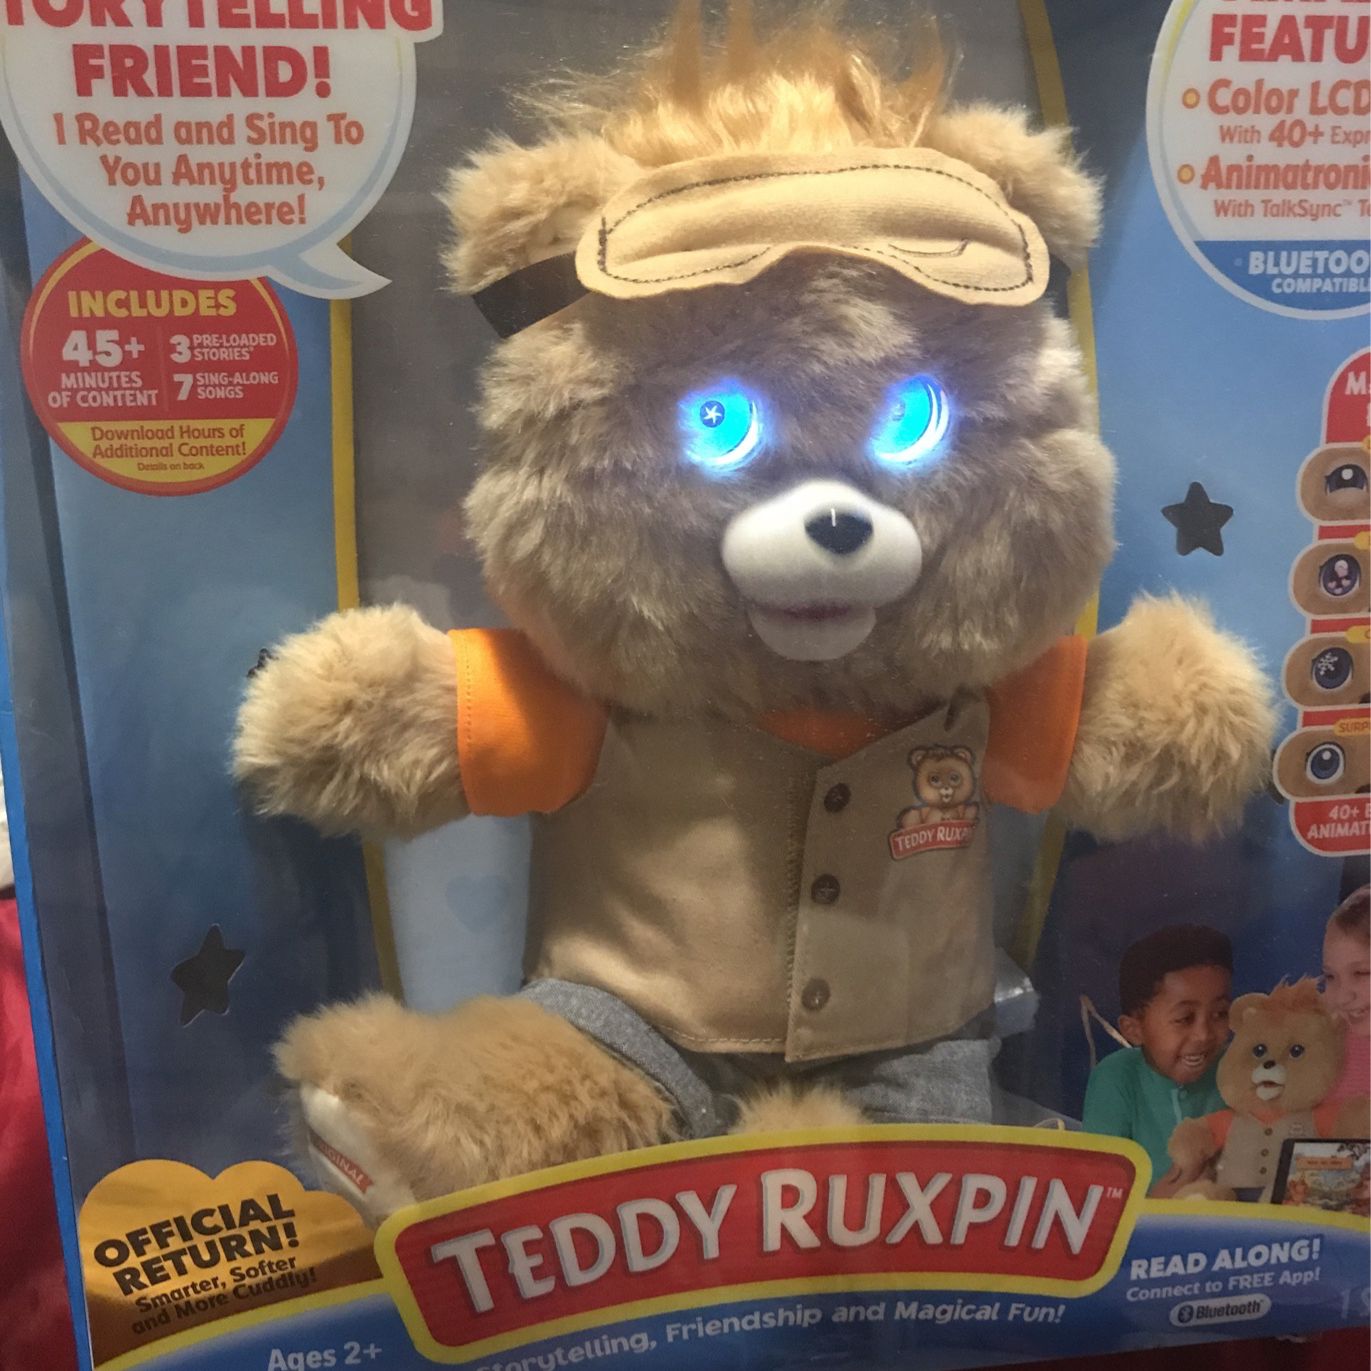 Teddy Ruxpin